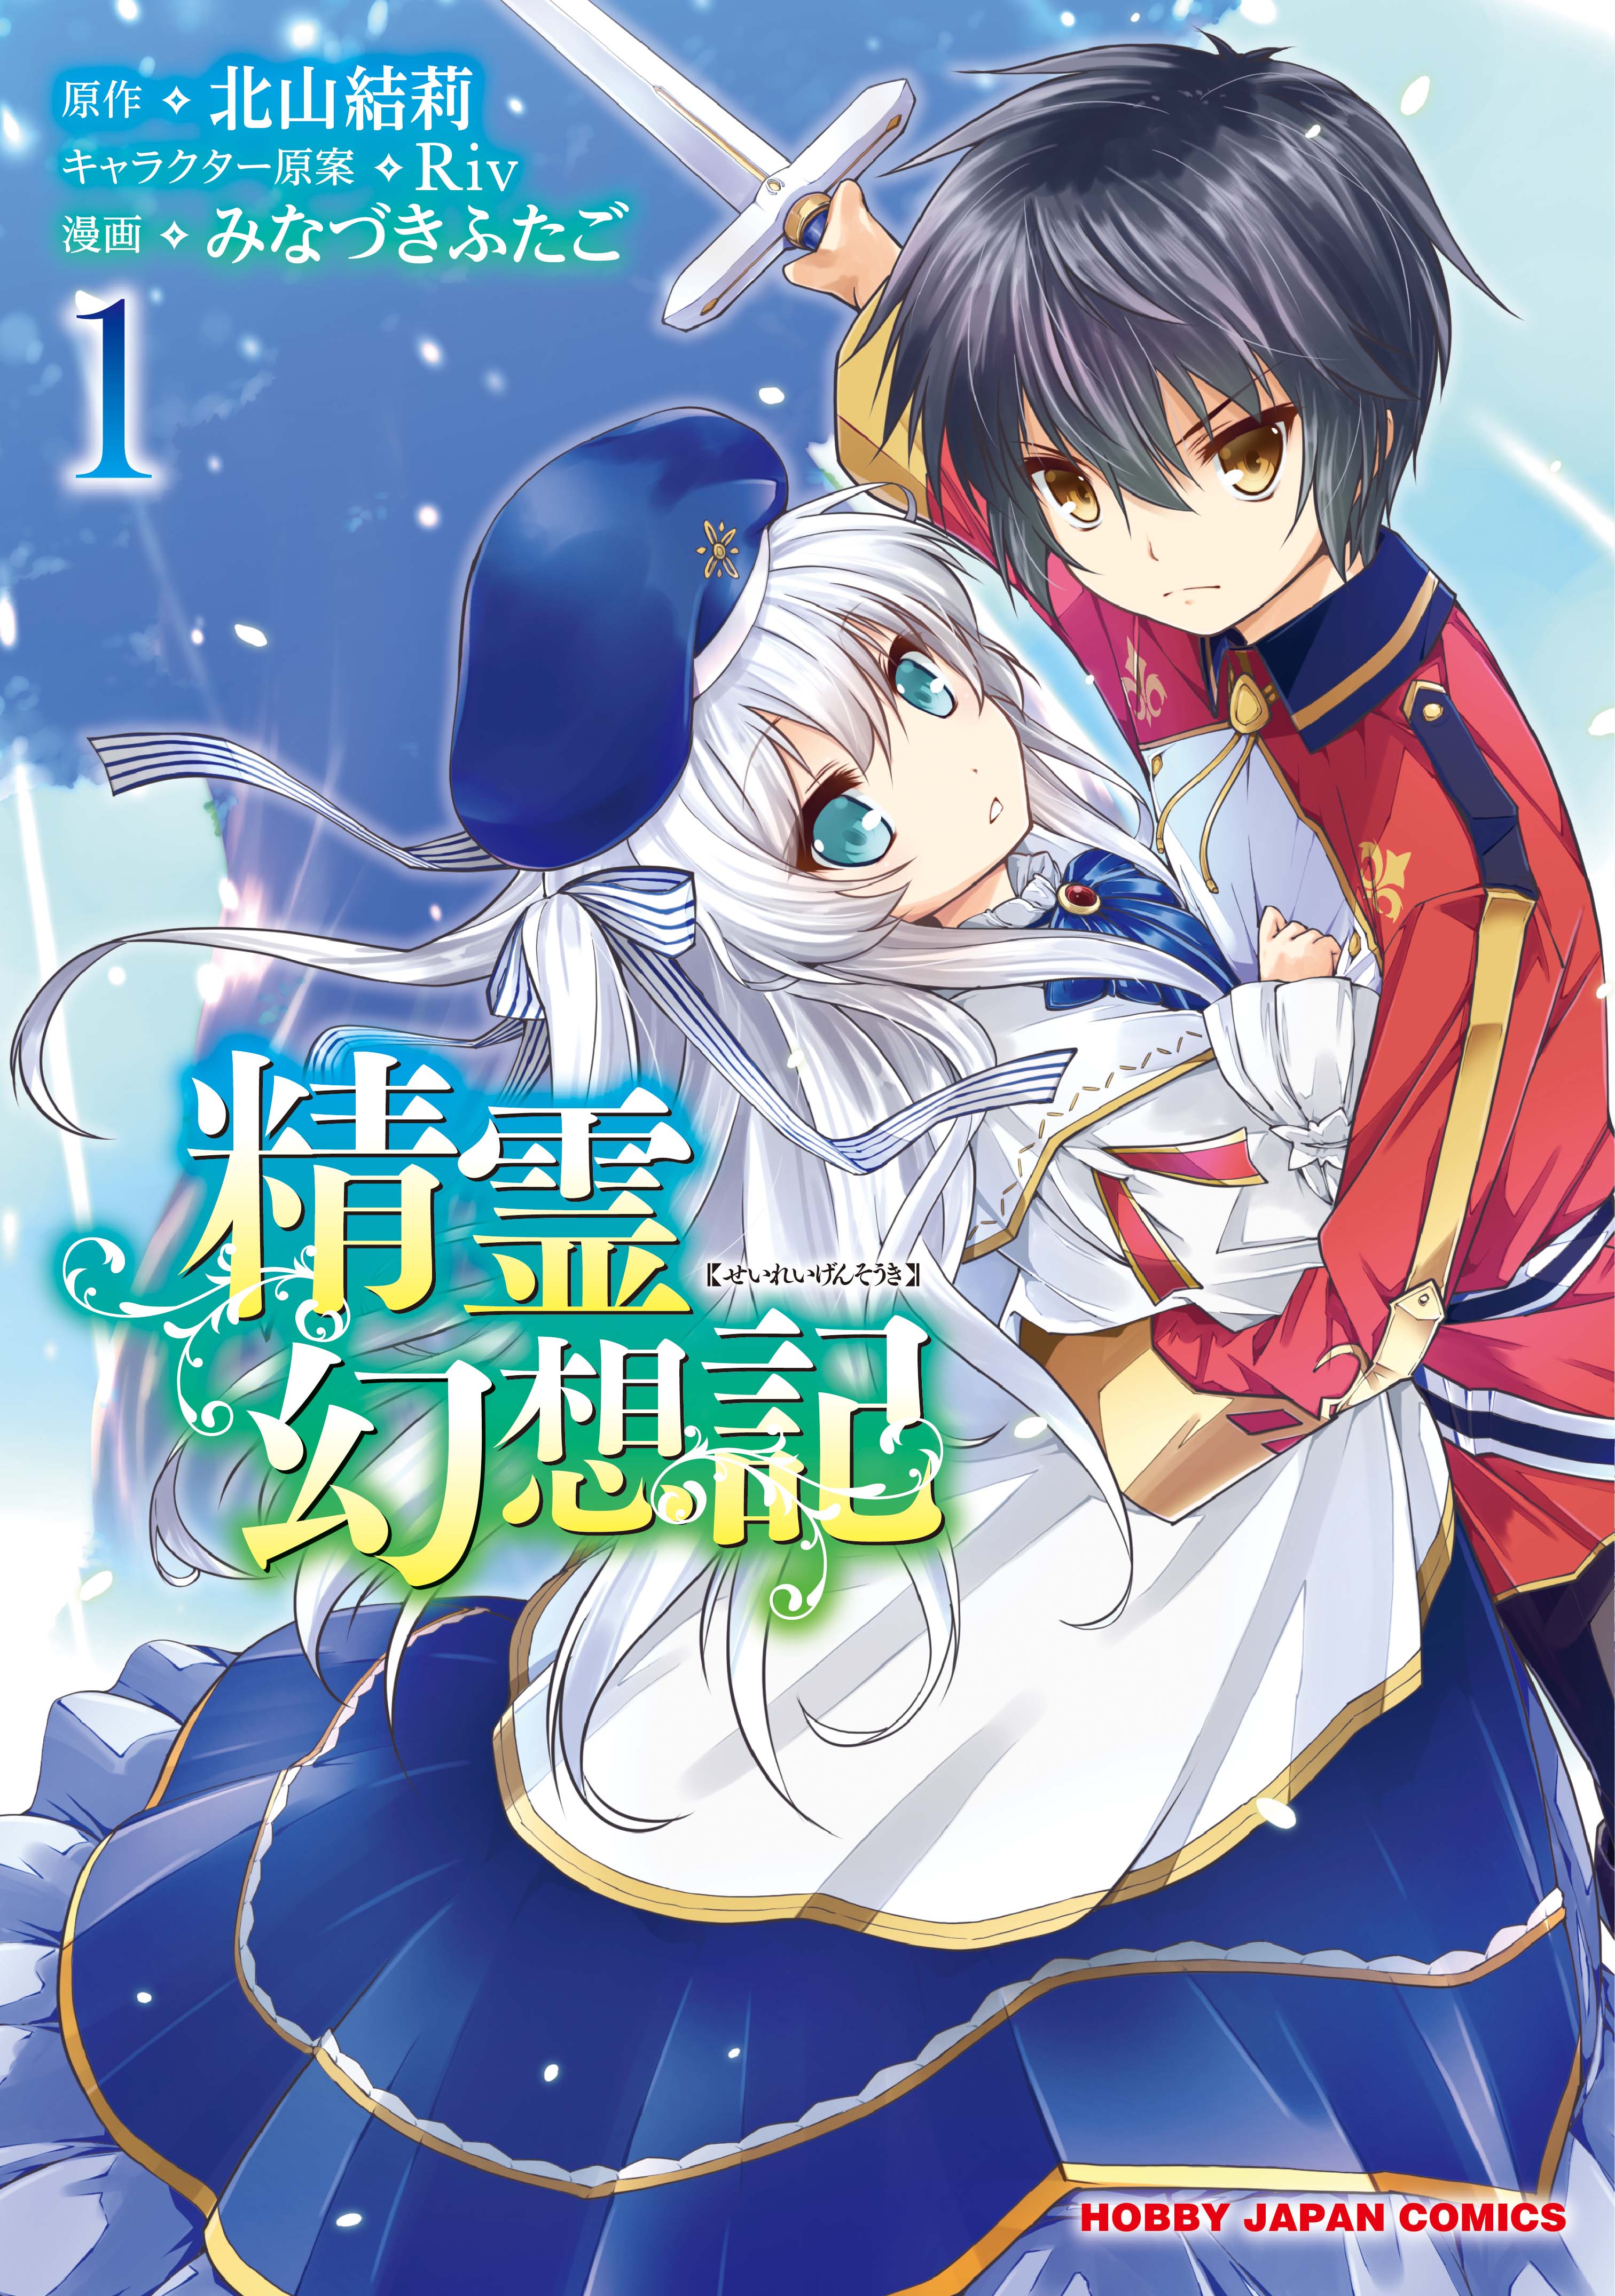 Seirei Gensouki: Spirit Chronicles Volume 2 - Manga - BOOK☆WALKER